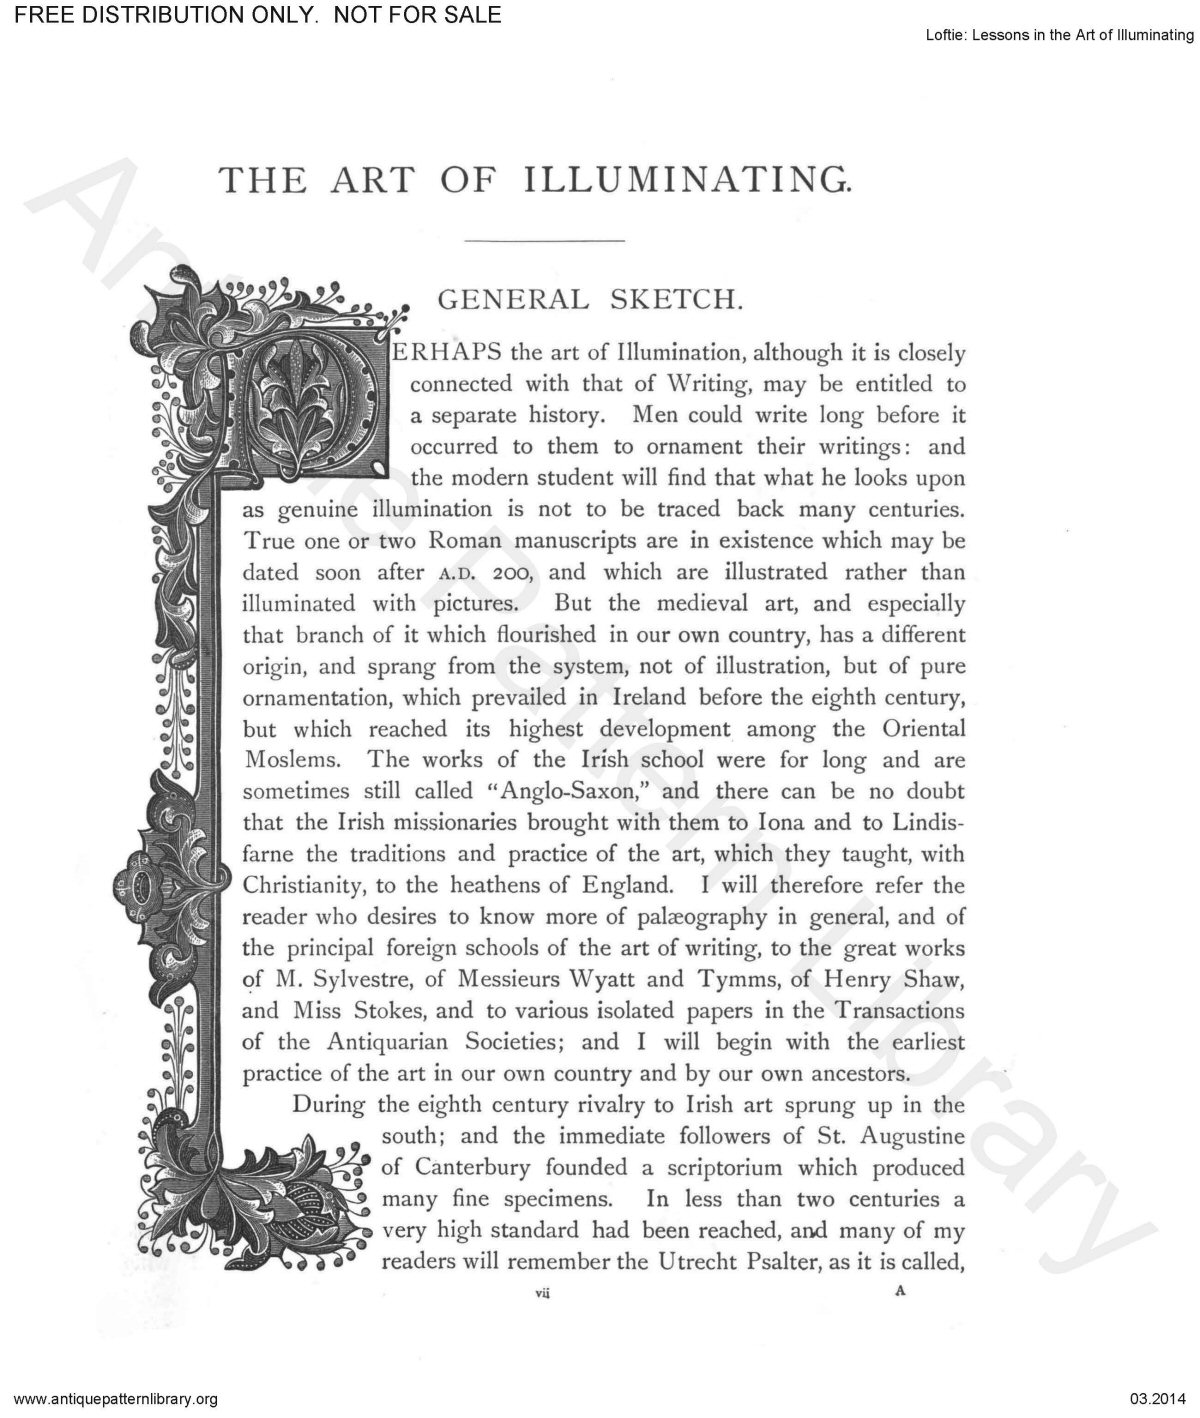 B-TT007 Lessons in the Art of Illuminating